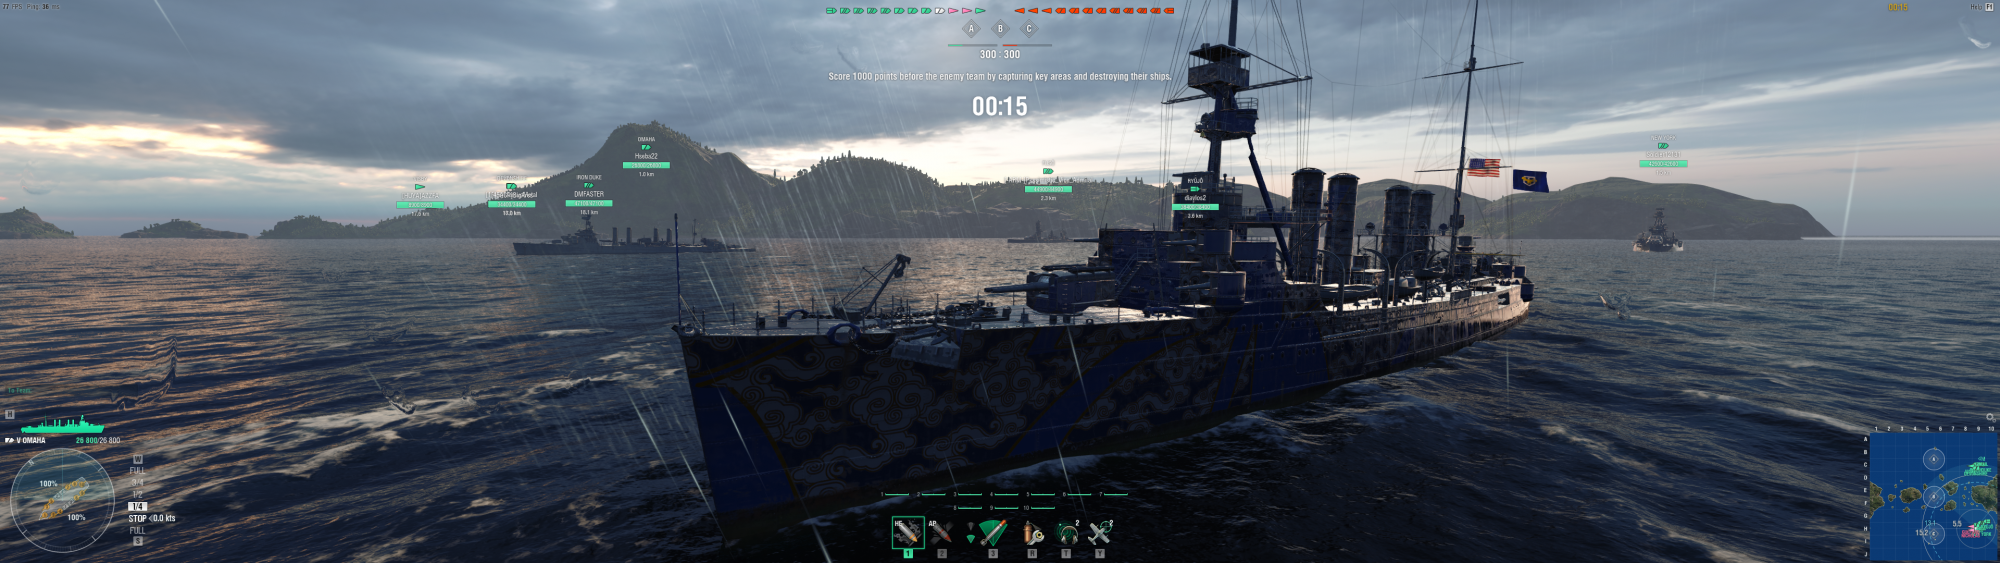 World of Warships Screenshot 2020.05.01 - 19.22.48.66.png